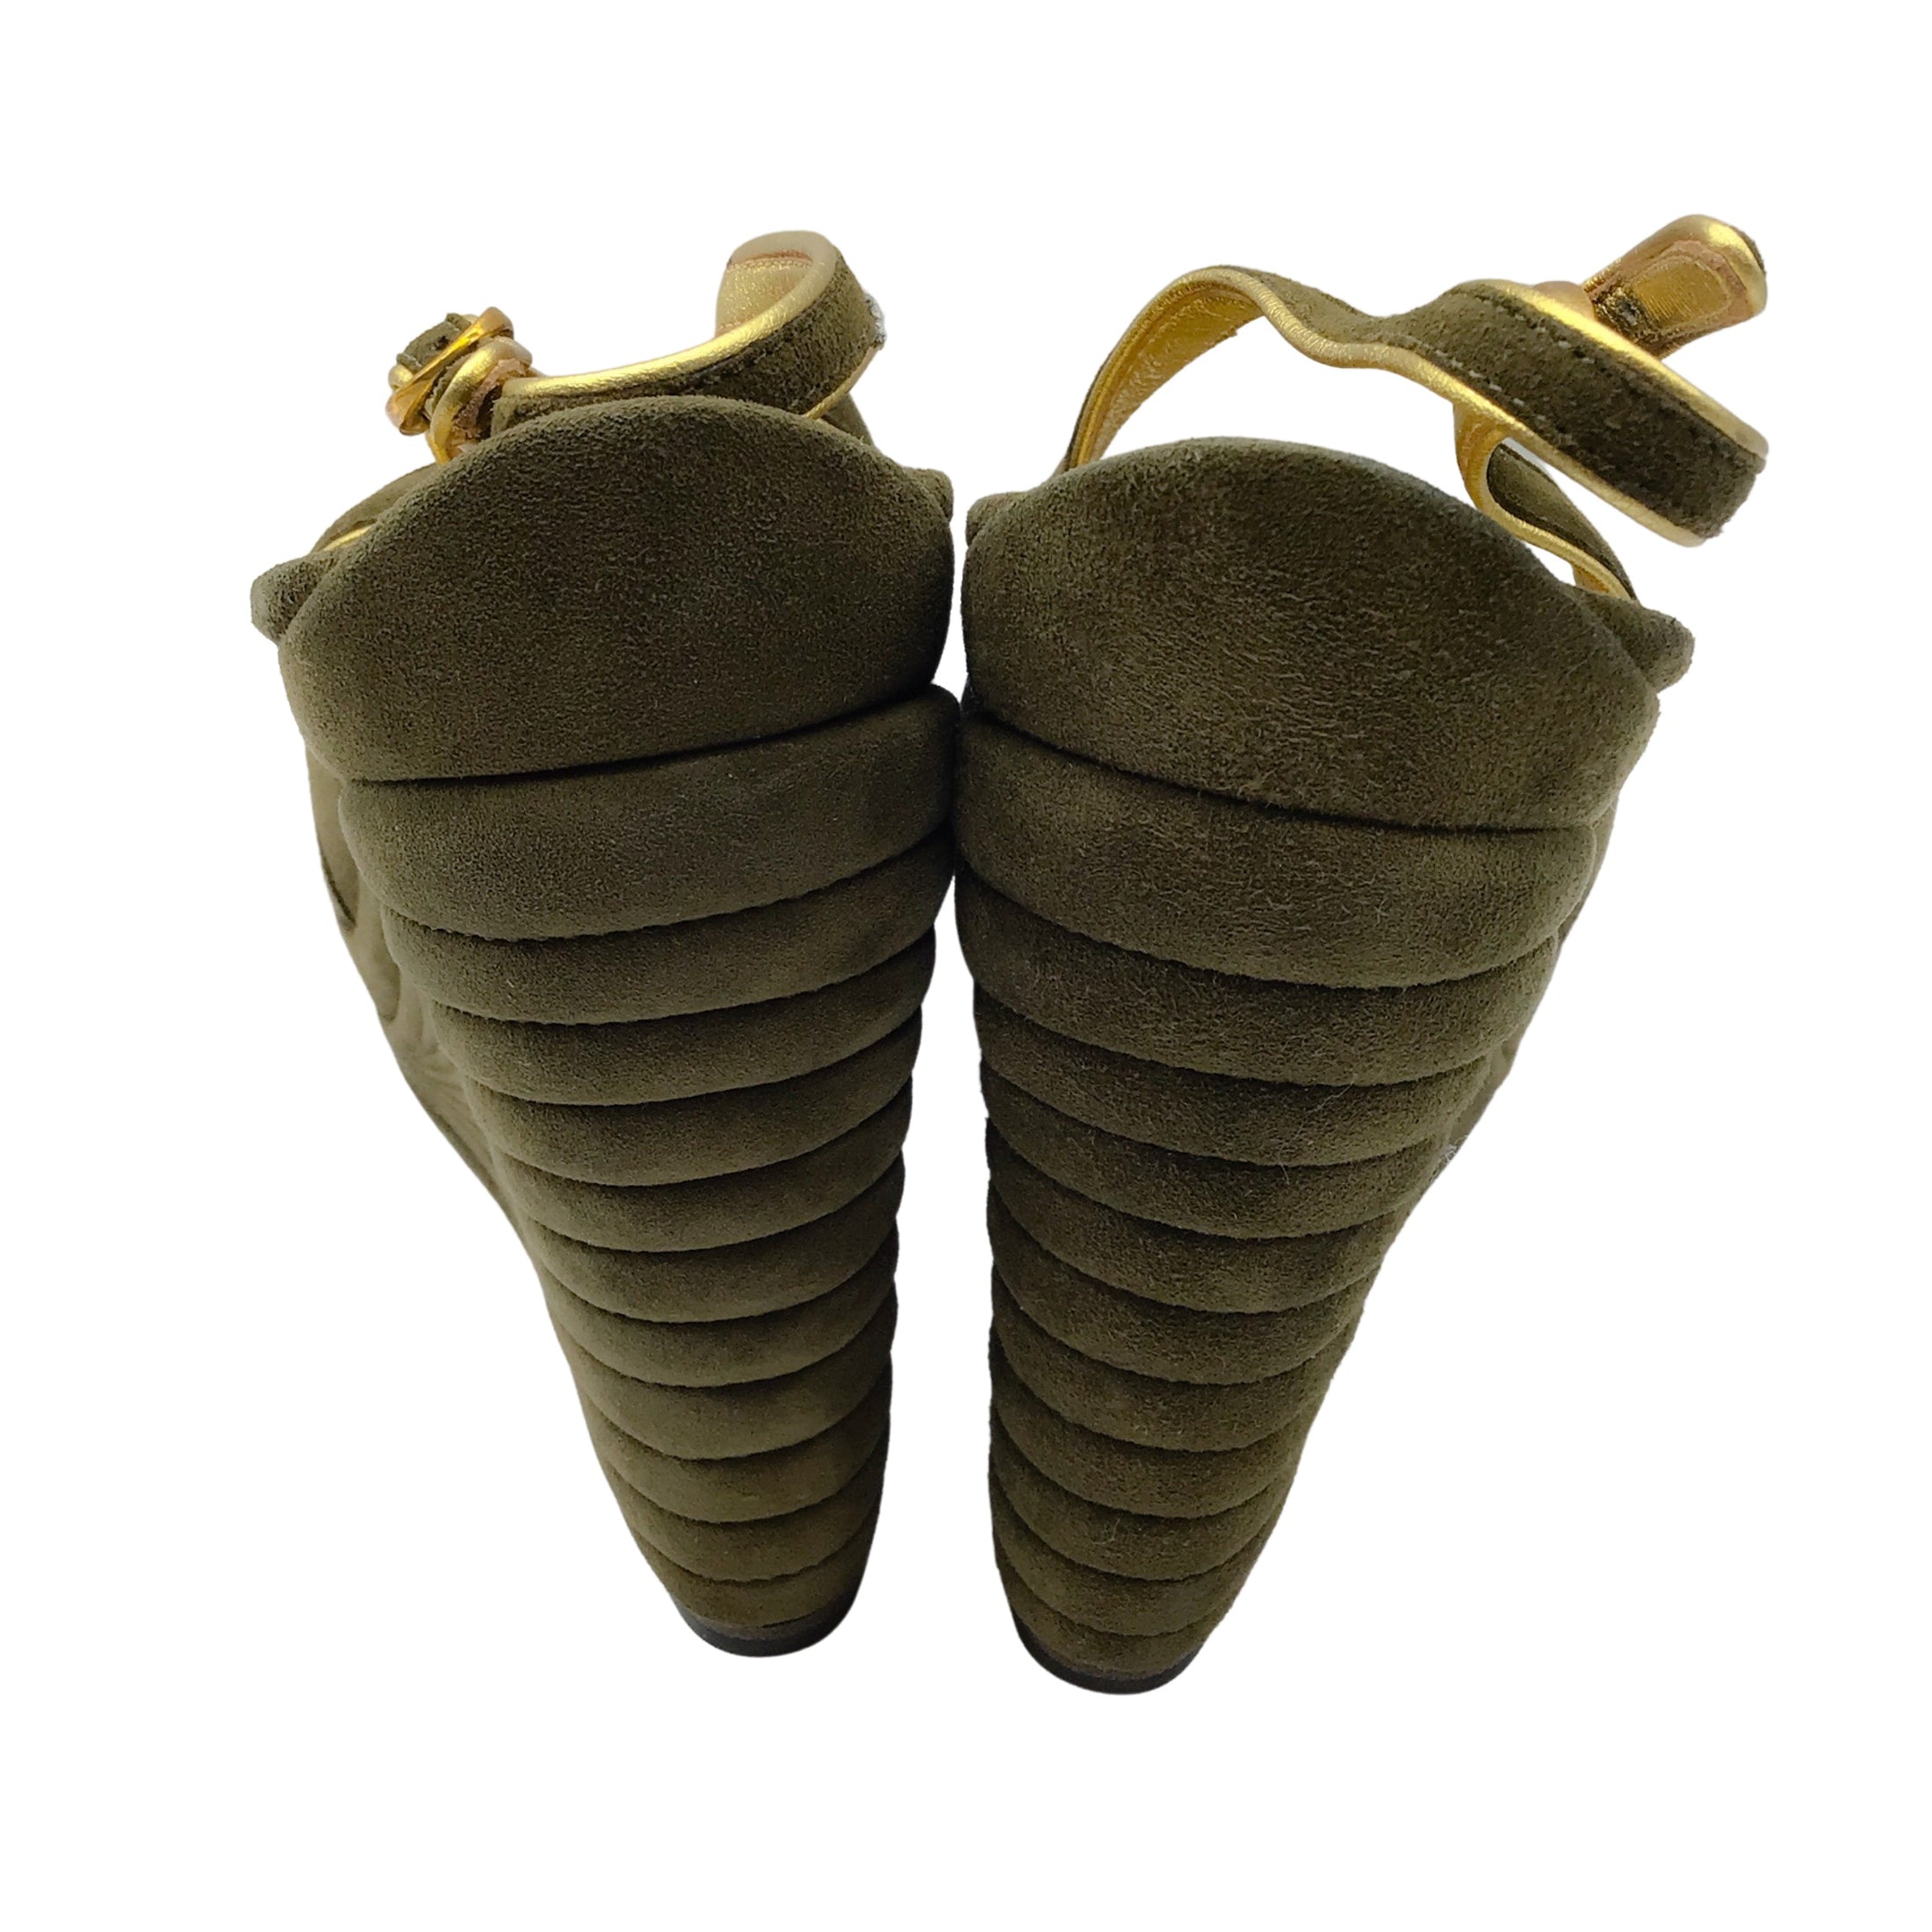 Yves Saint Laurent 'Myranda' Olive Green / Gold Metallic Leather Trimmed Peep Toe Slingback Suede Platform Wedge Shoes